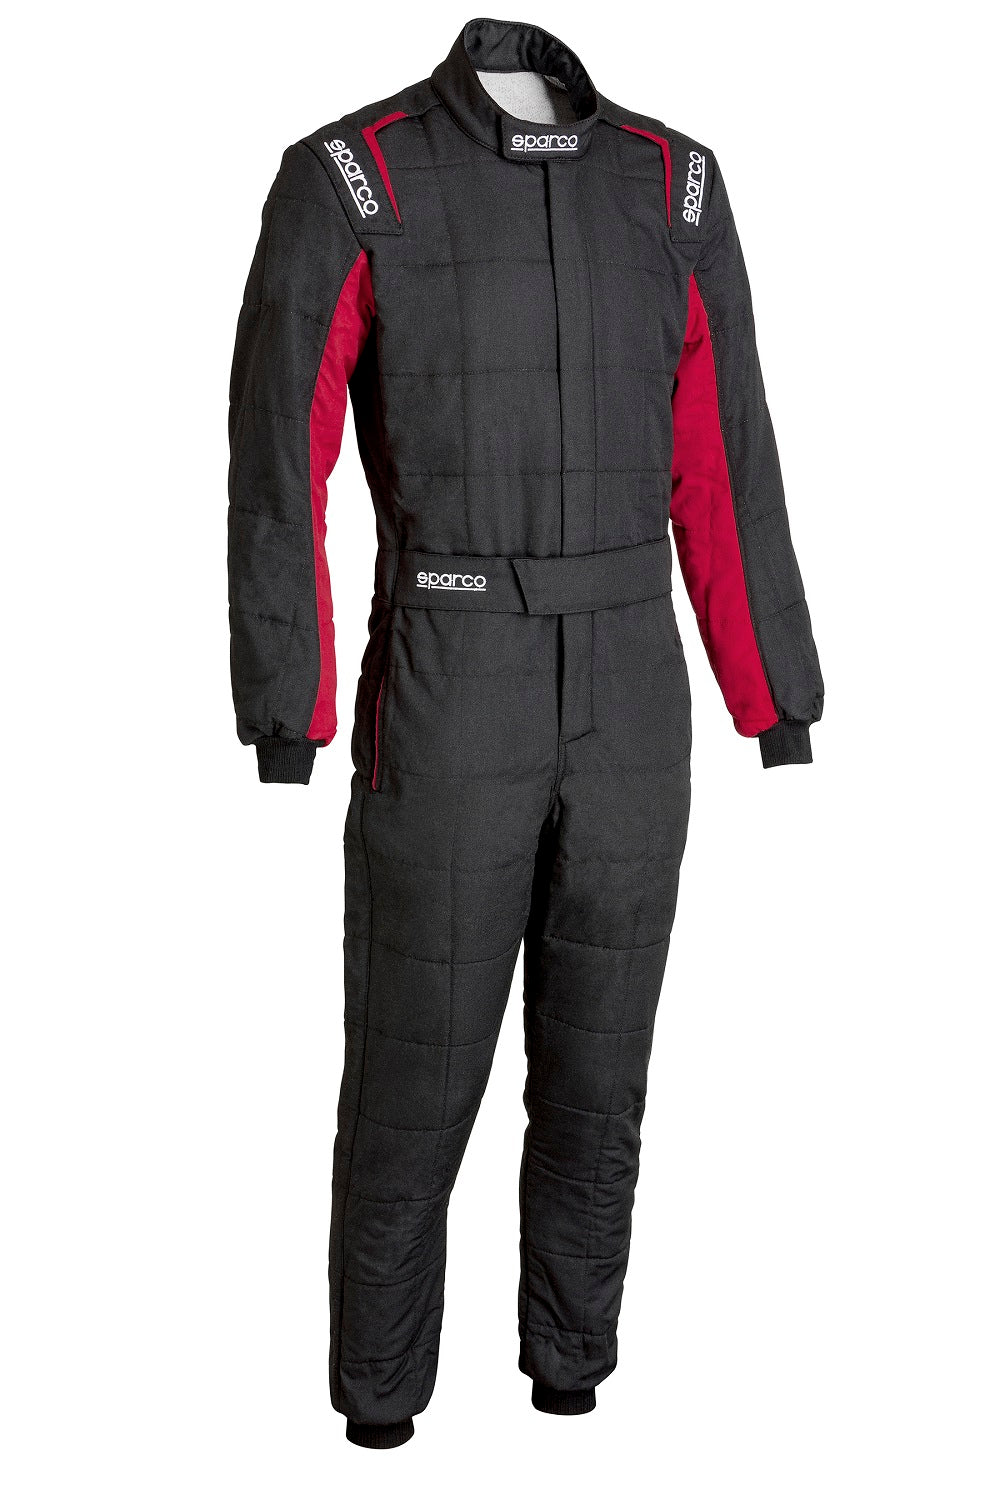 Sparco Conquest 3.0 Race Suit Black / Red Front Image